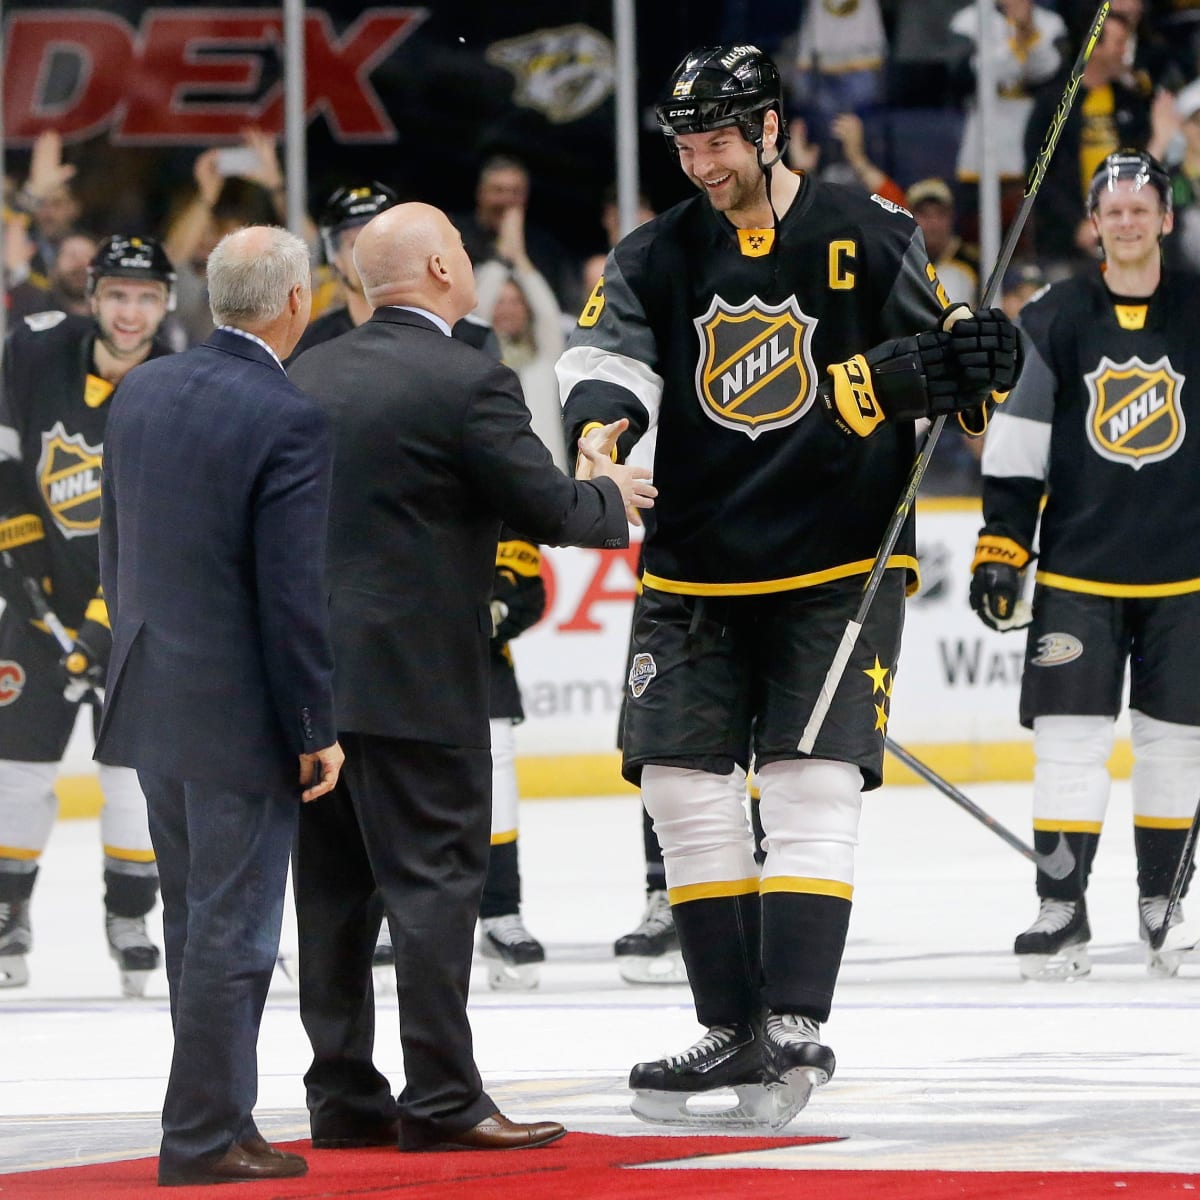 John Scott, NHL All-Star Game set ratings record for NBCSN